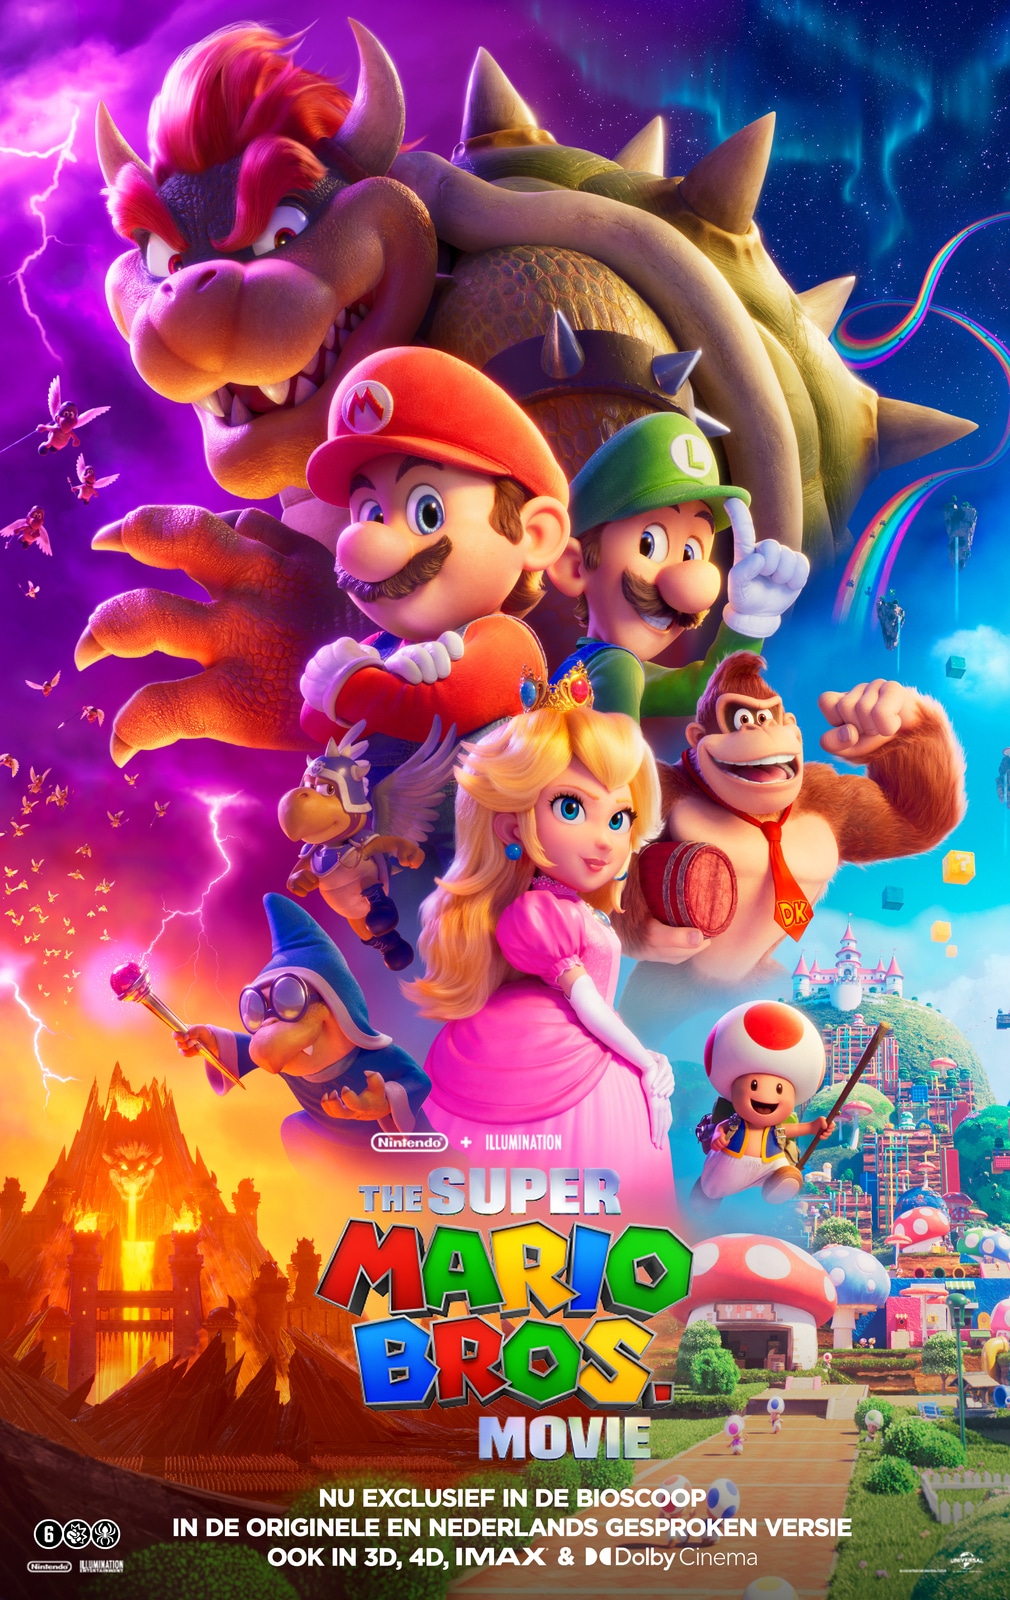 The Super Mario Bros. Movie (2D OV)